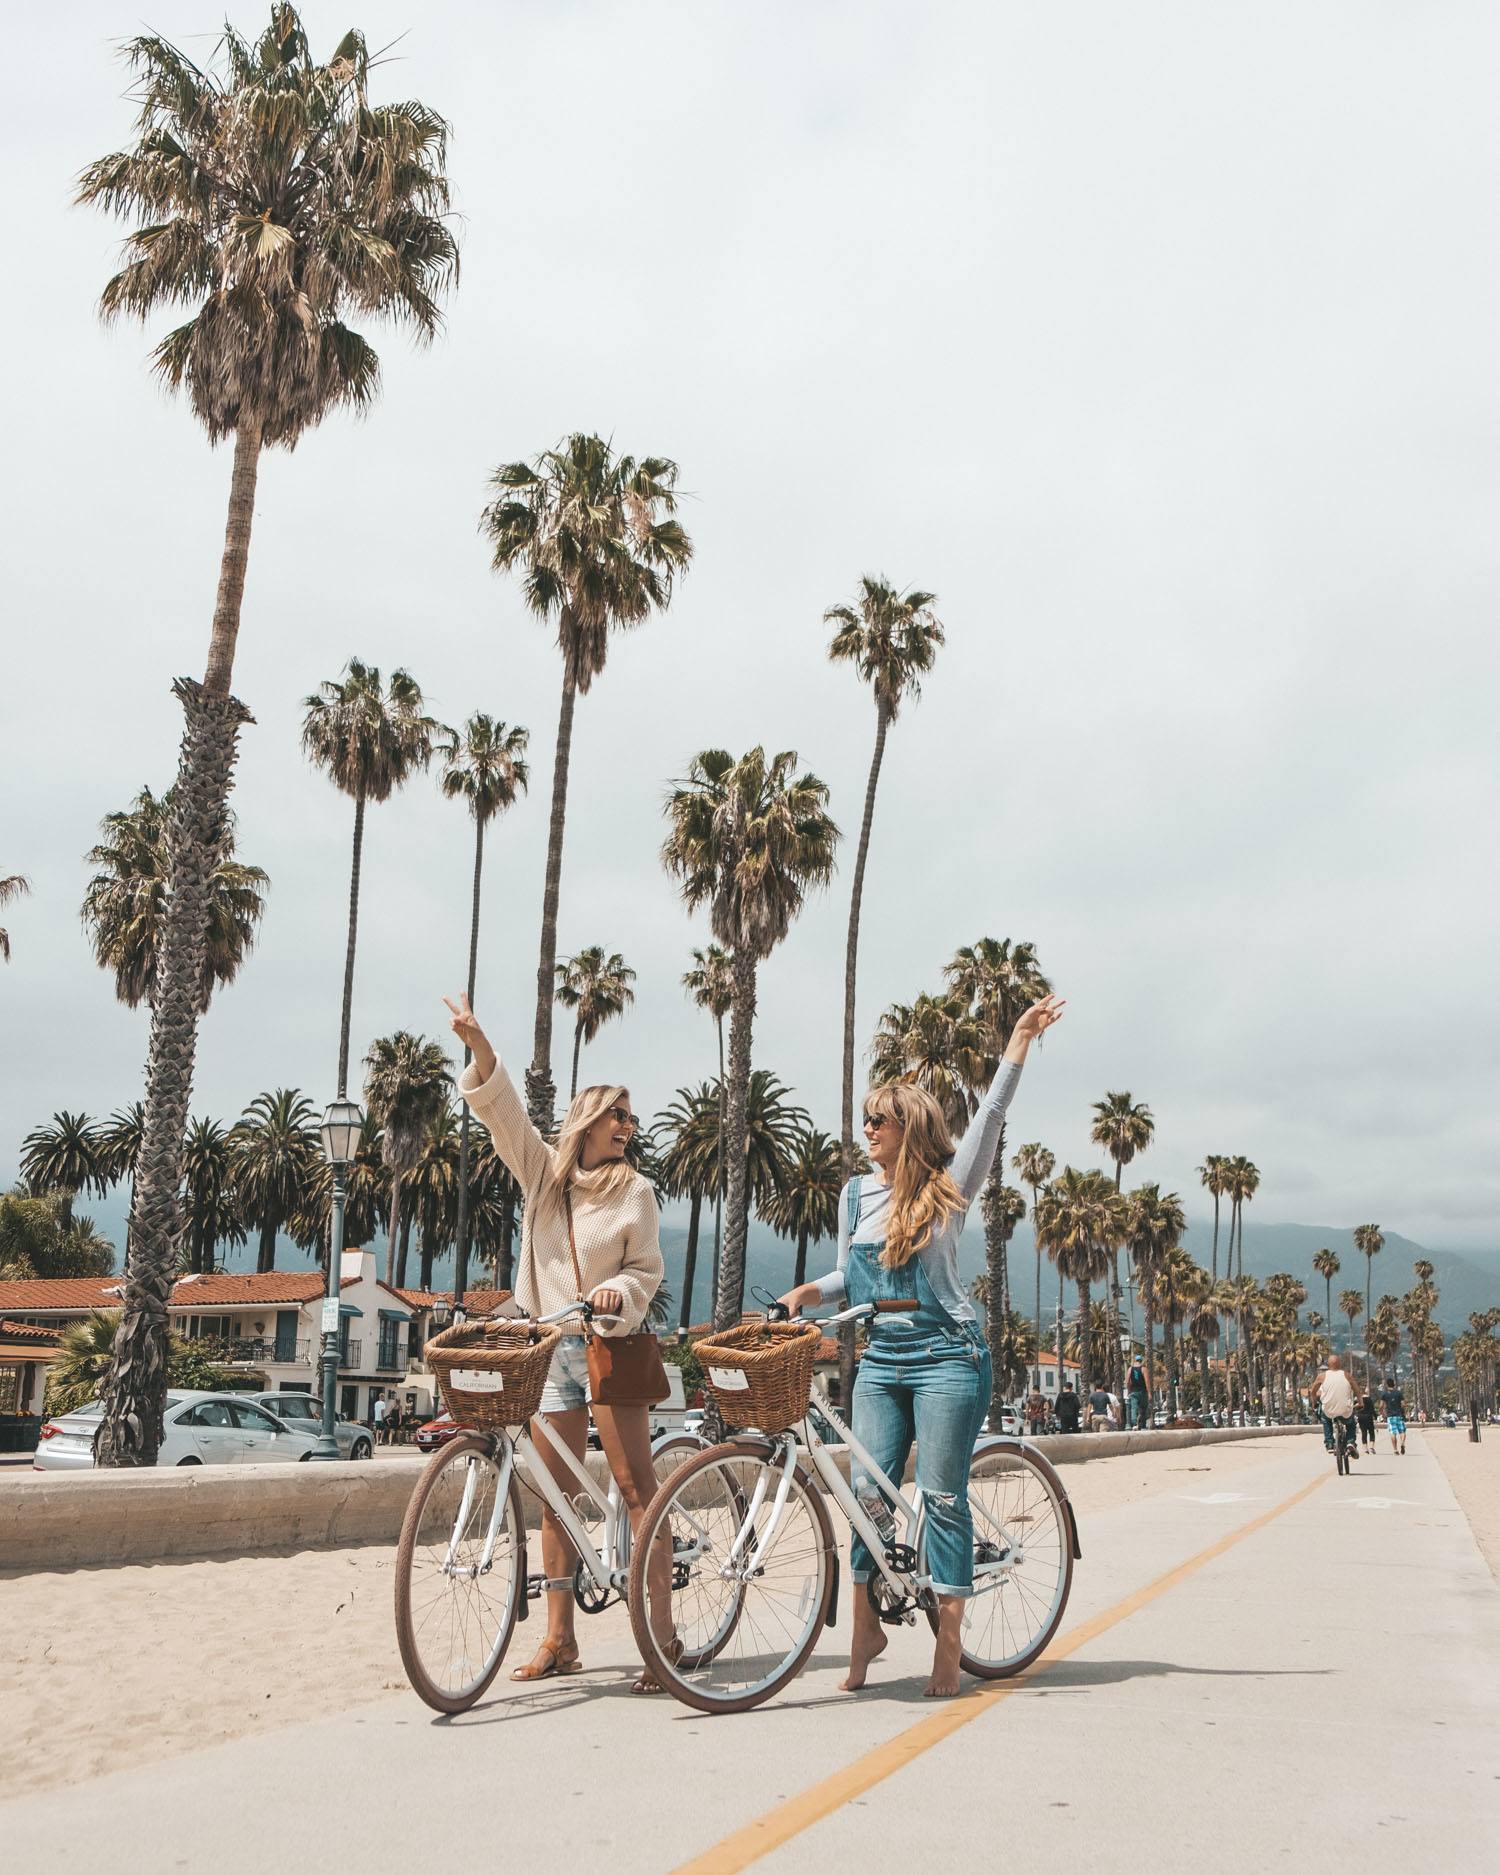 Riding Bikes on Santa Barbara Boardwalk